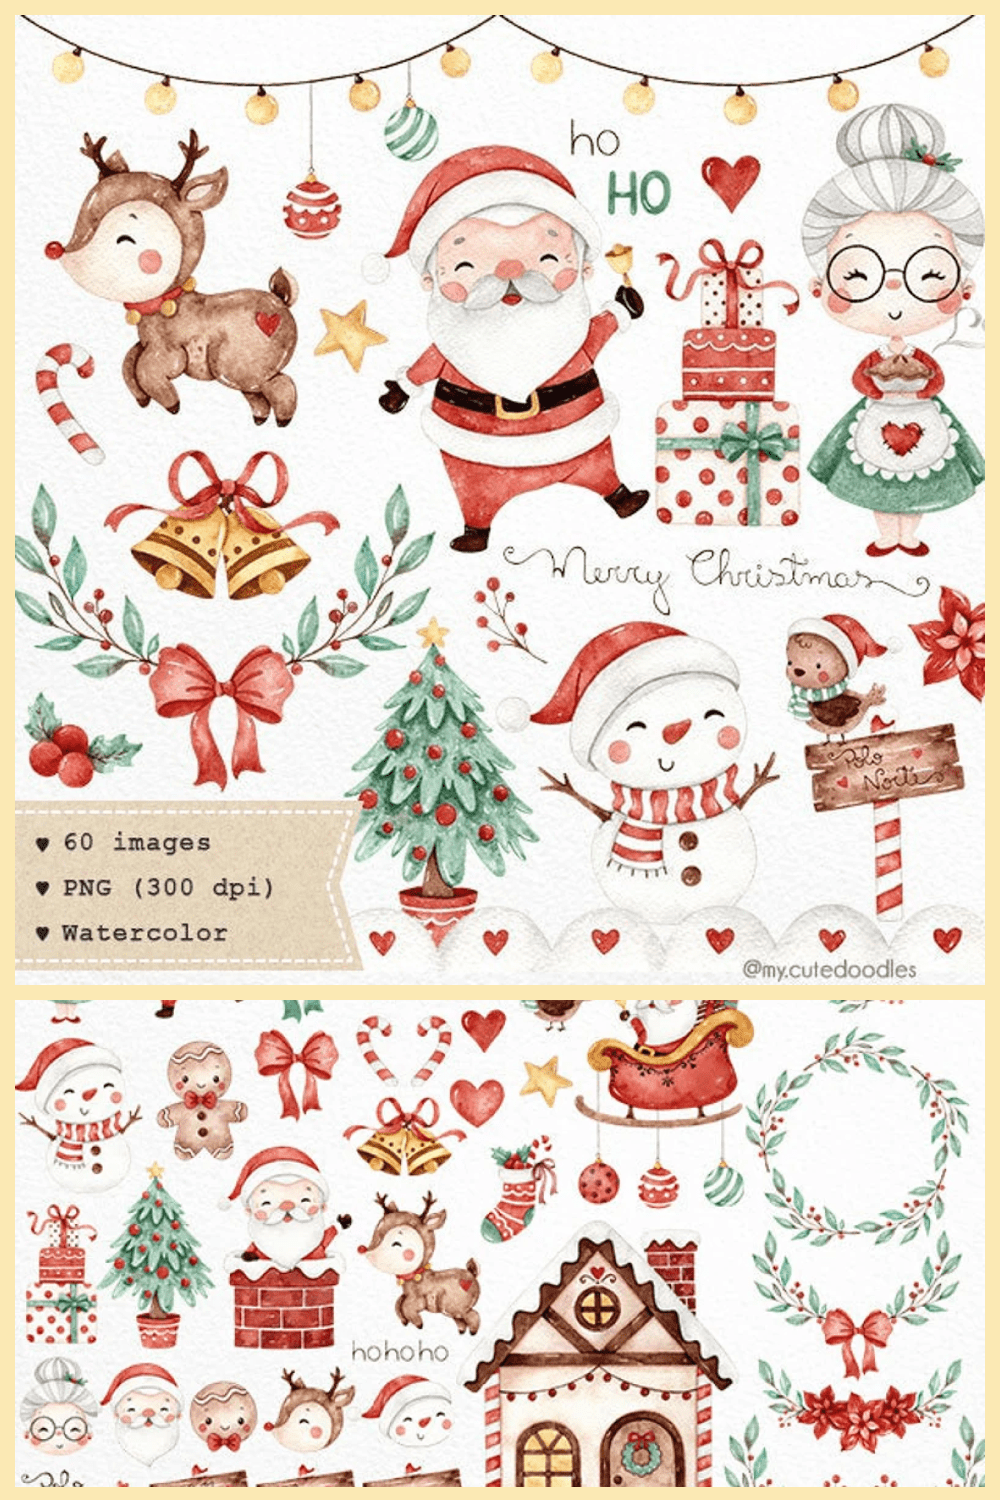 santa claus and woman among gifts, christmas tree, snowman, christmas wreaths, reindeer.